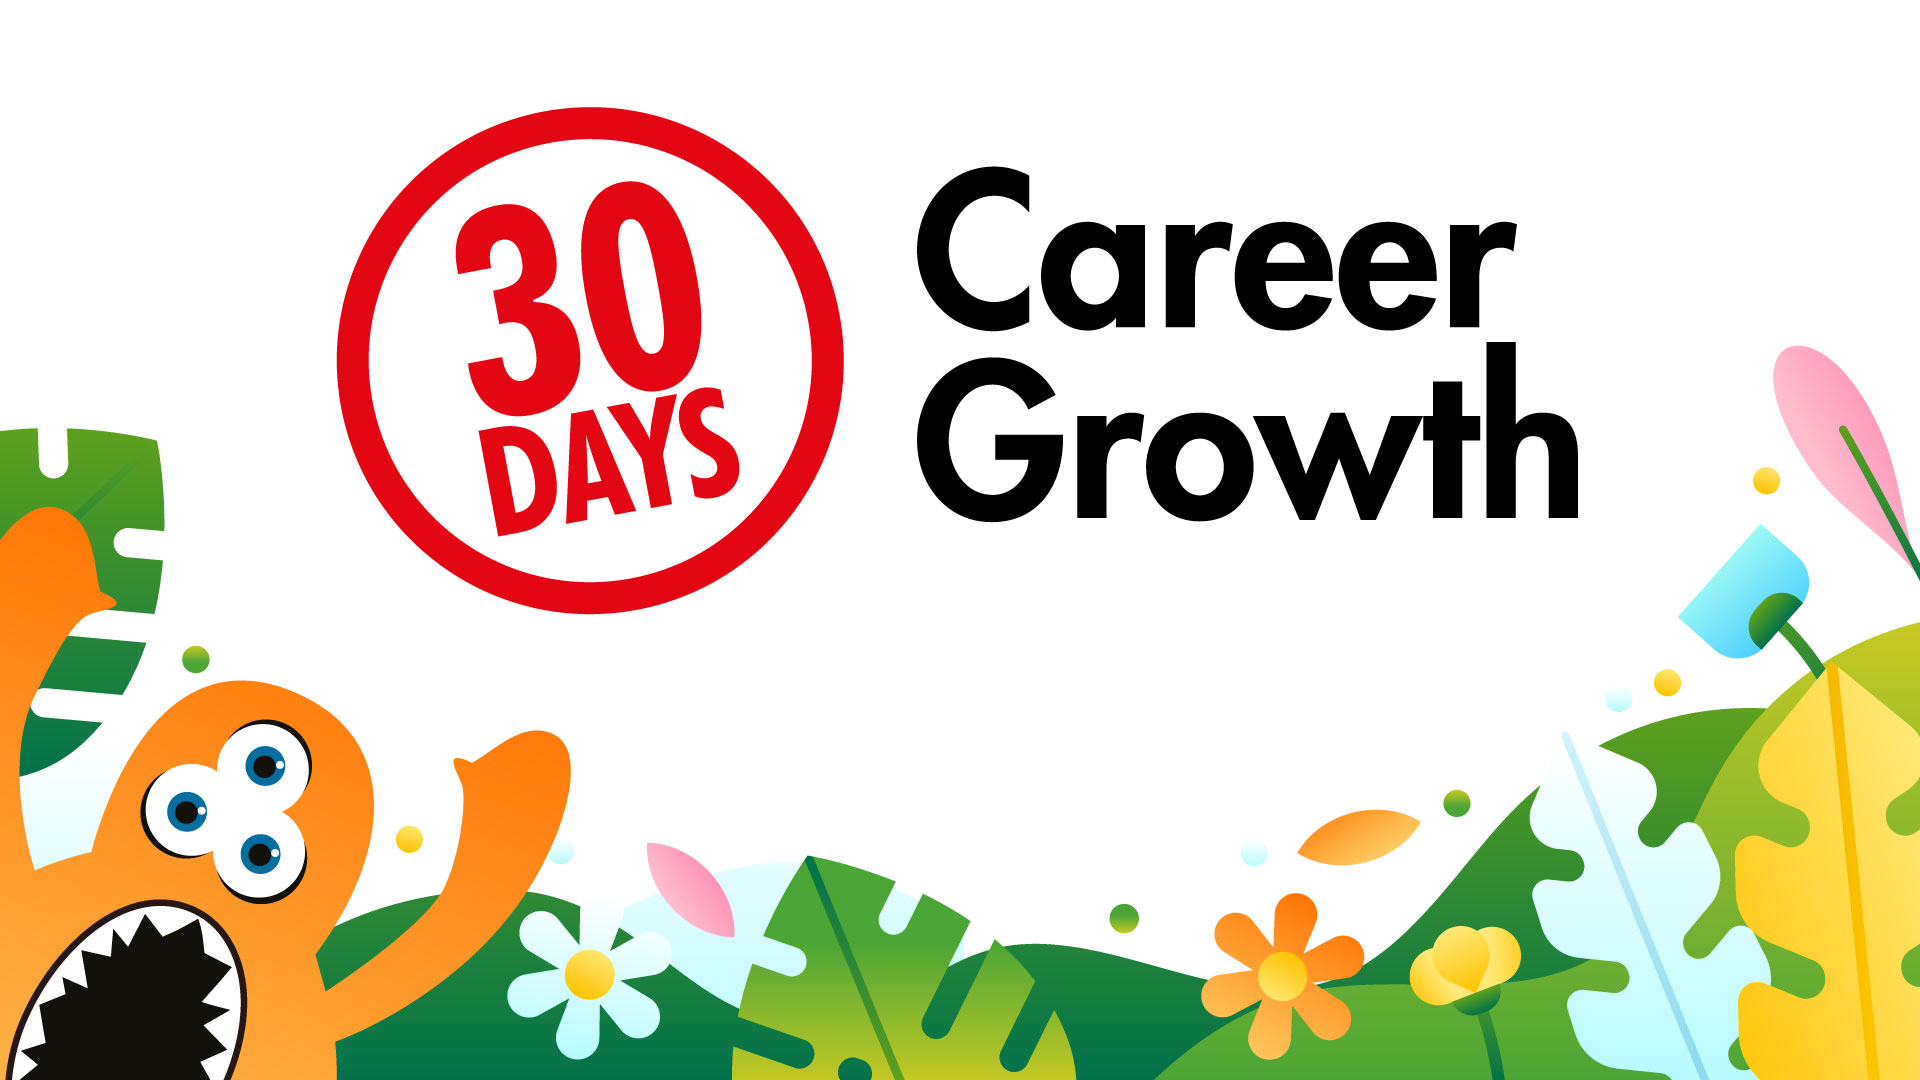 30 Days of Career Growth